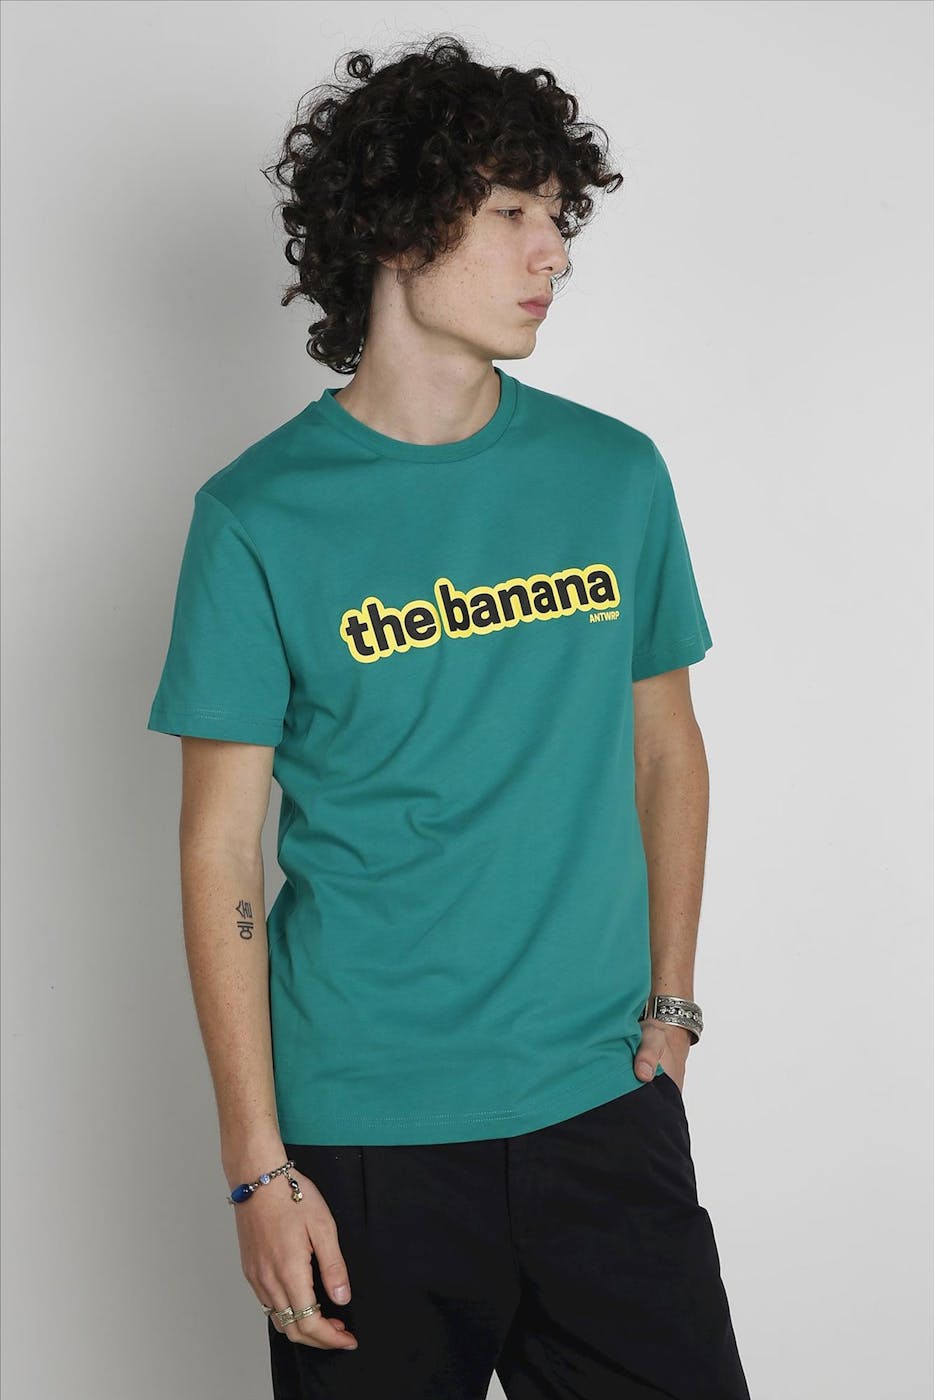 Antwrp - Groene-gele Banana T-shirt